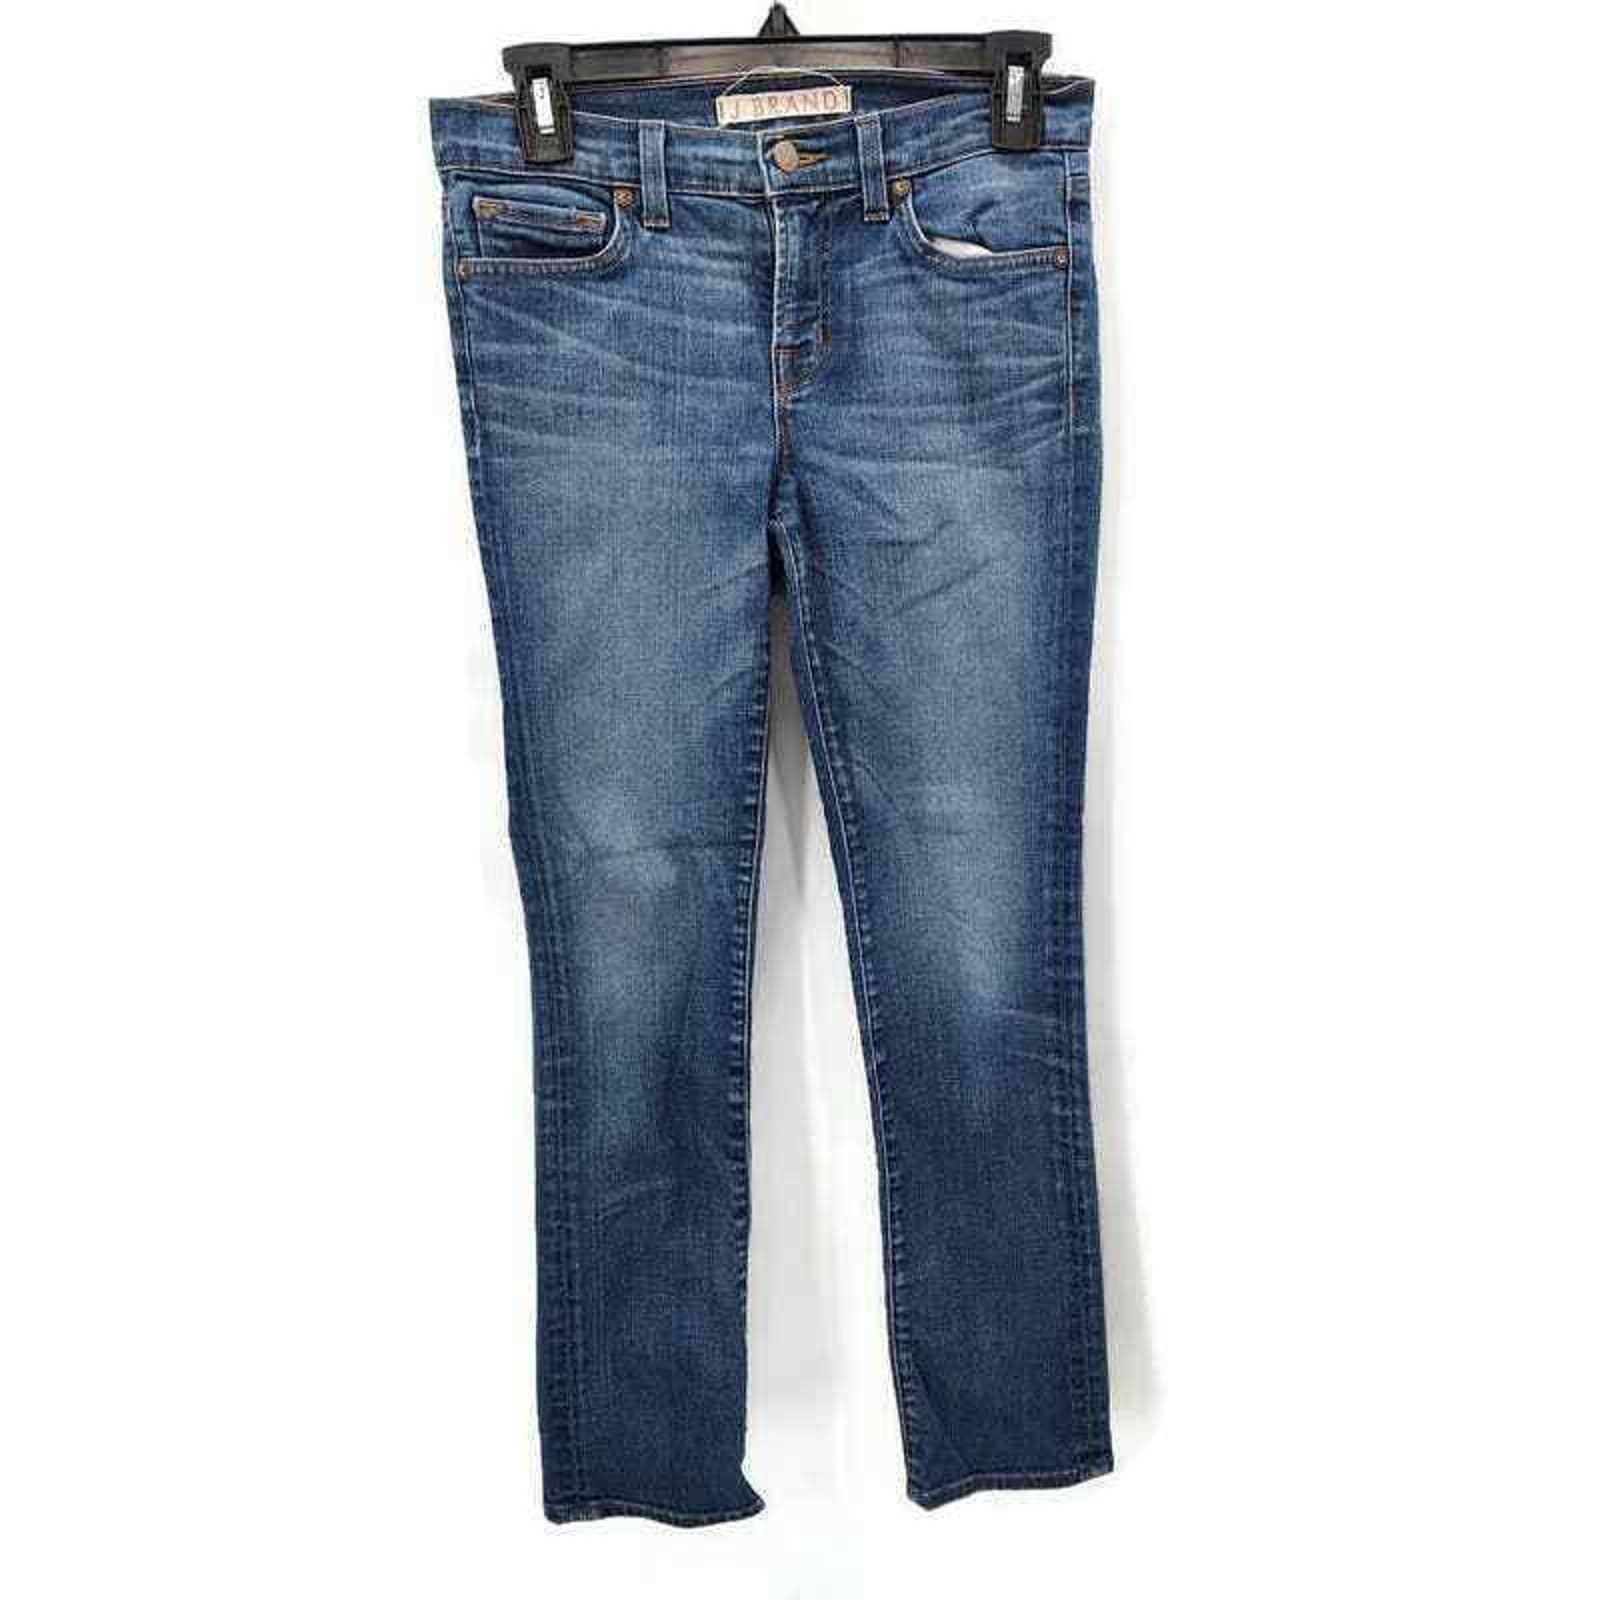 Amazing J Brand Medium Wash denim skinny jeans pants jeggings in size 26. PDU2L6PCy Low Price